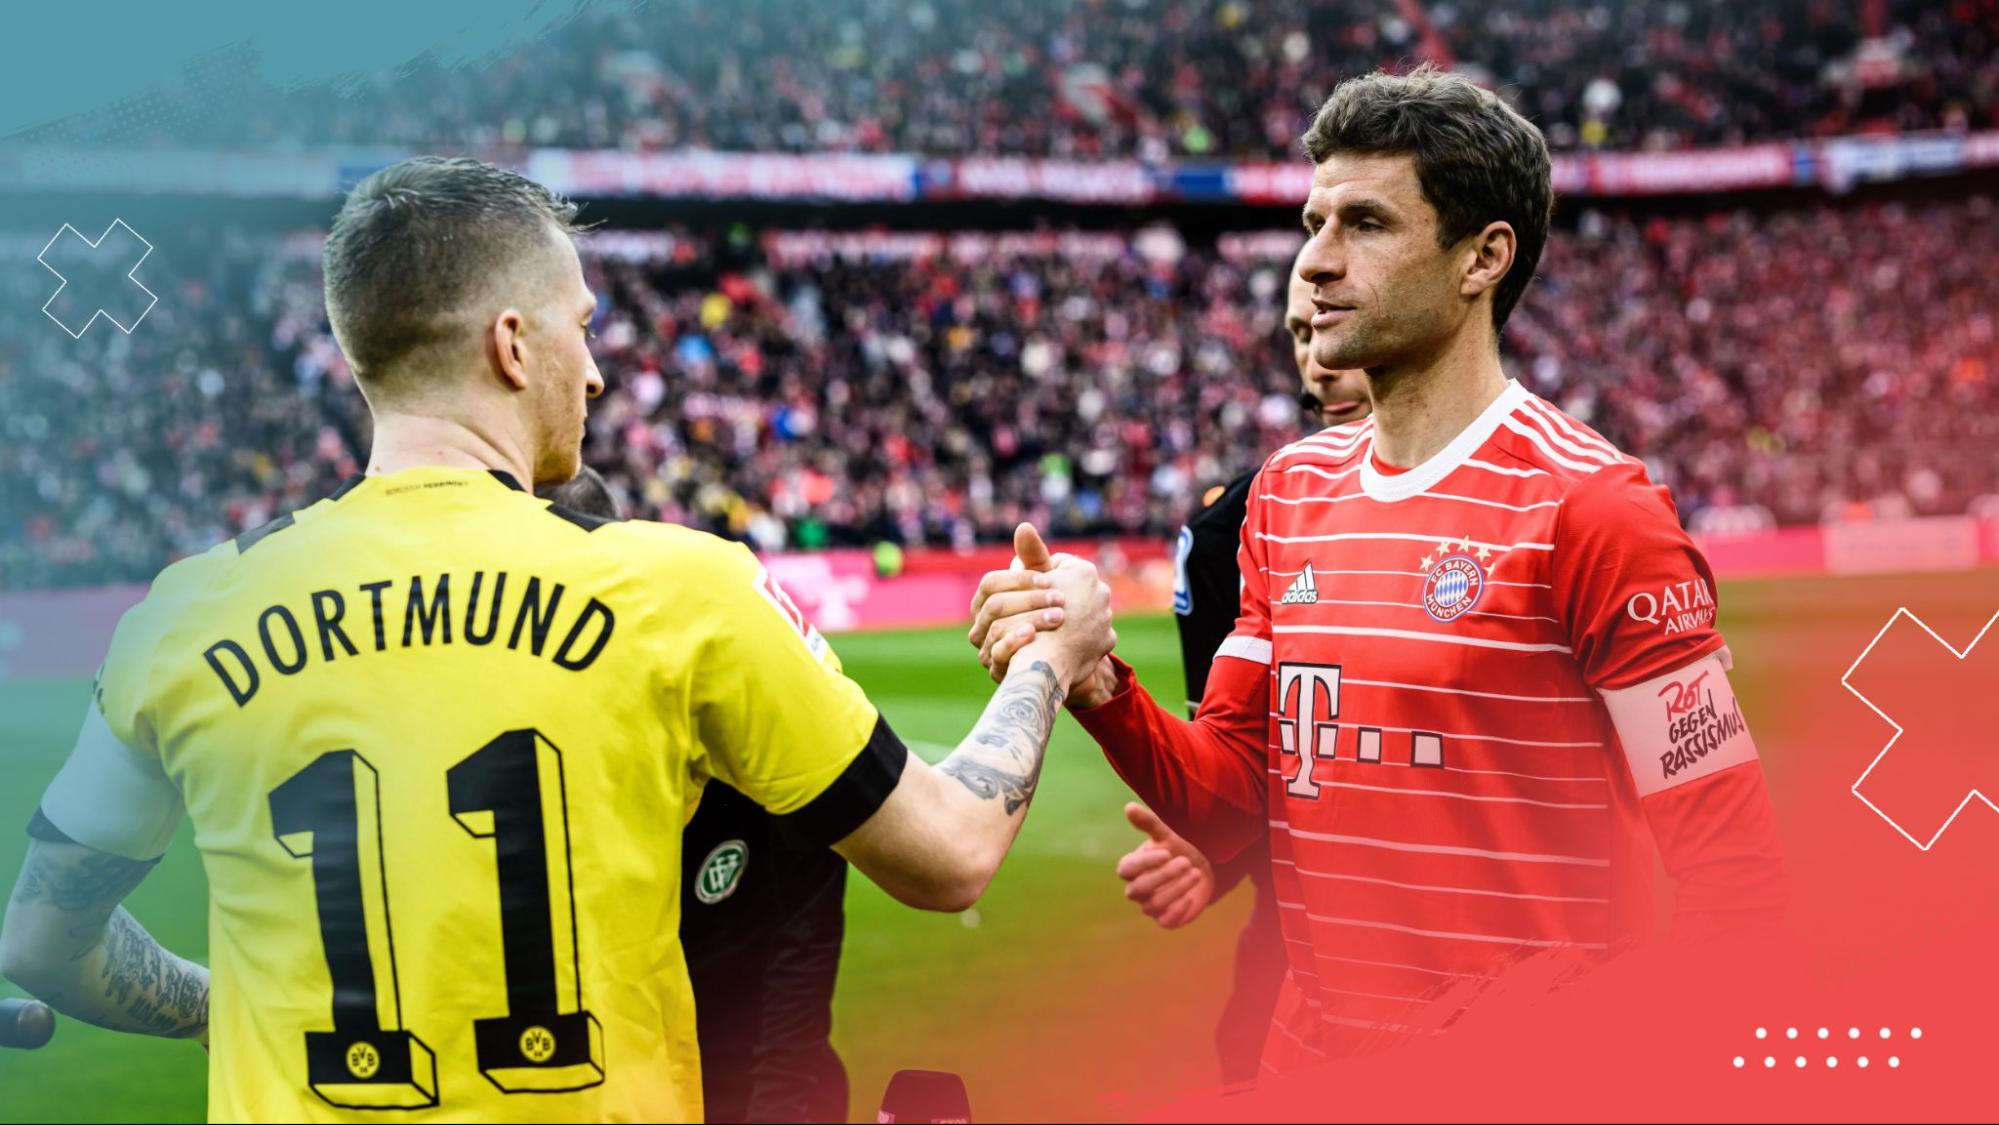 Upcoming derby between Bayern and Dortmund